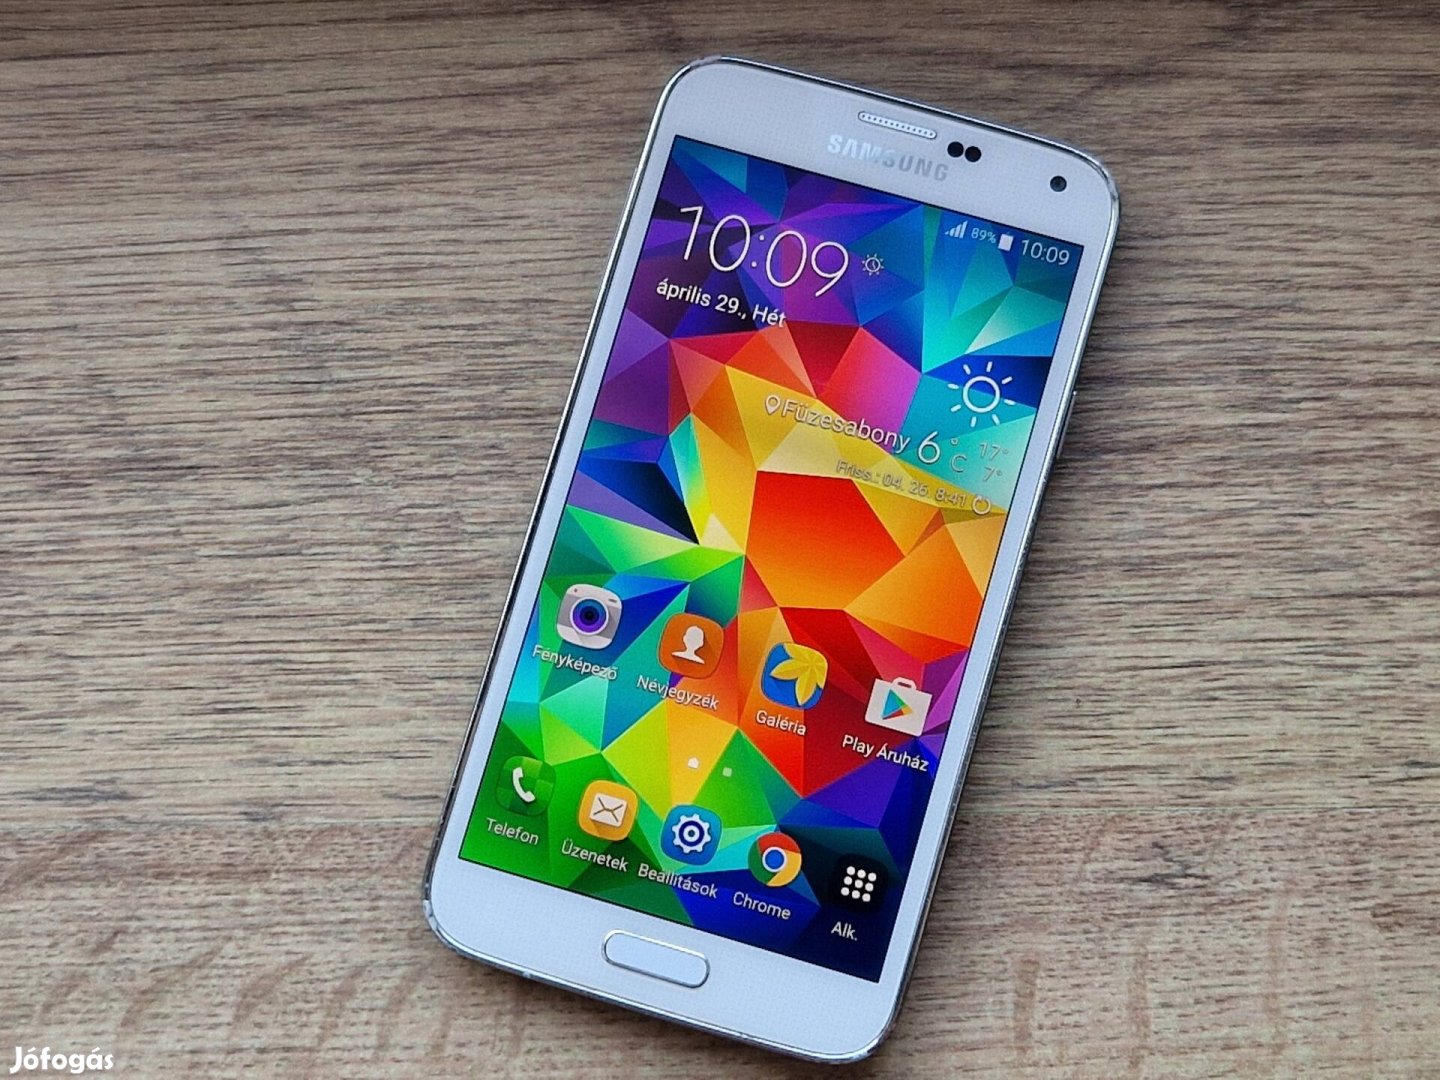 Samsung Galaxy S5 , Független, szép állapotú 